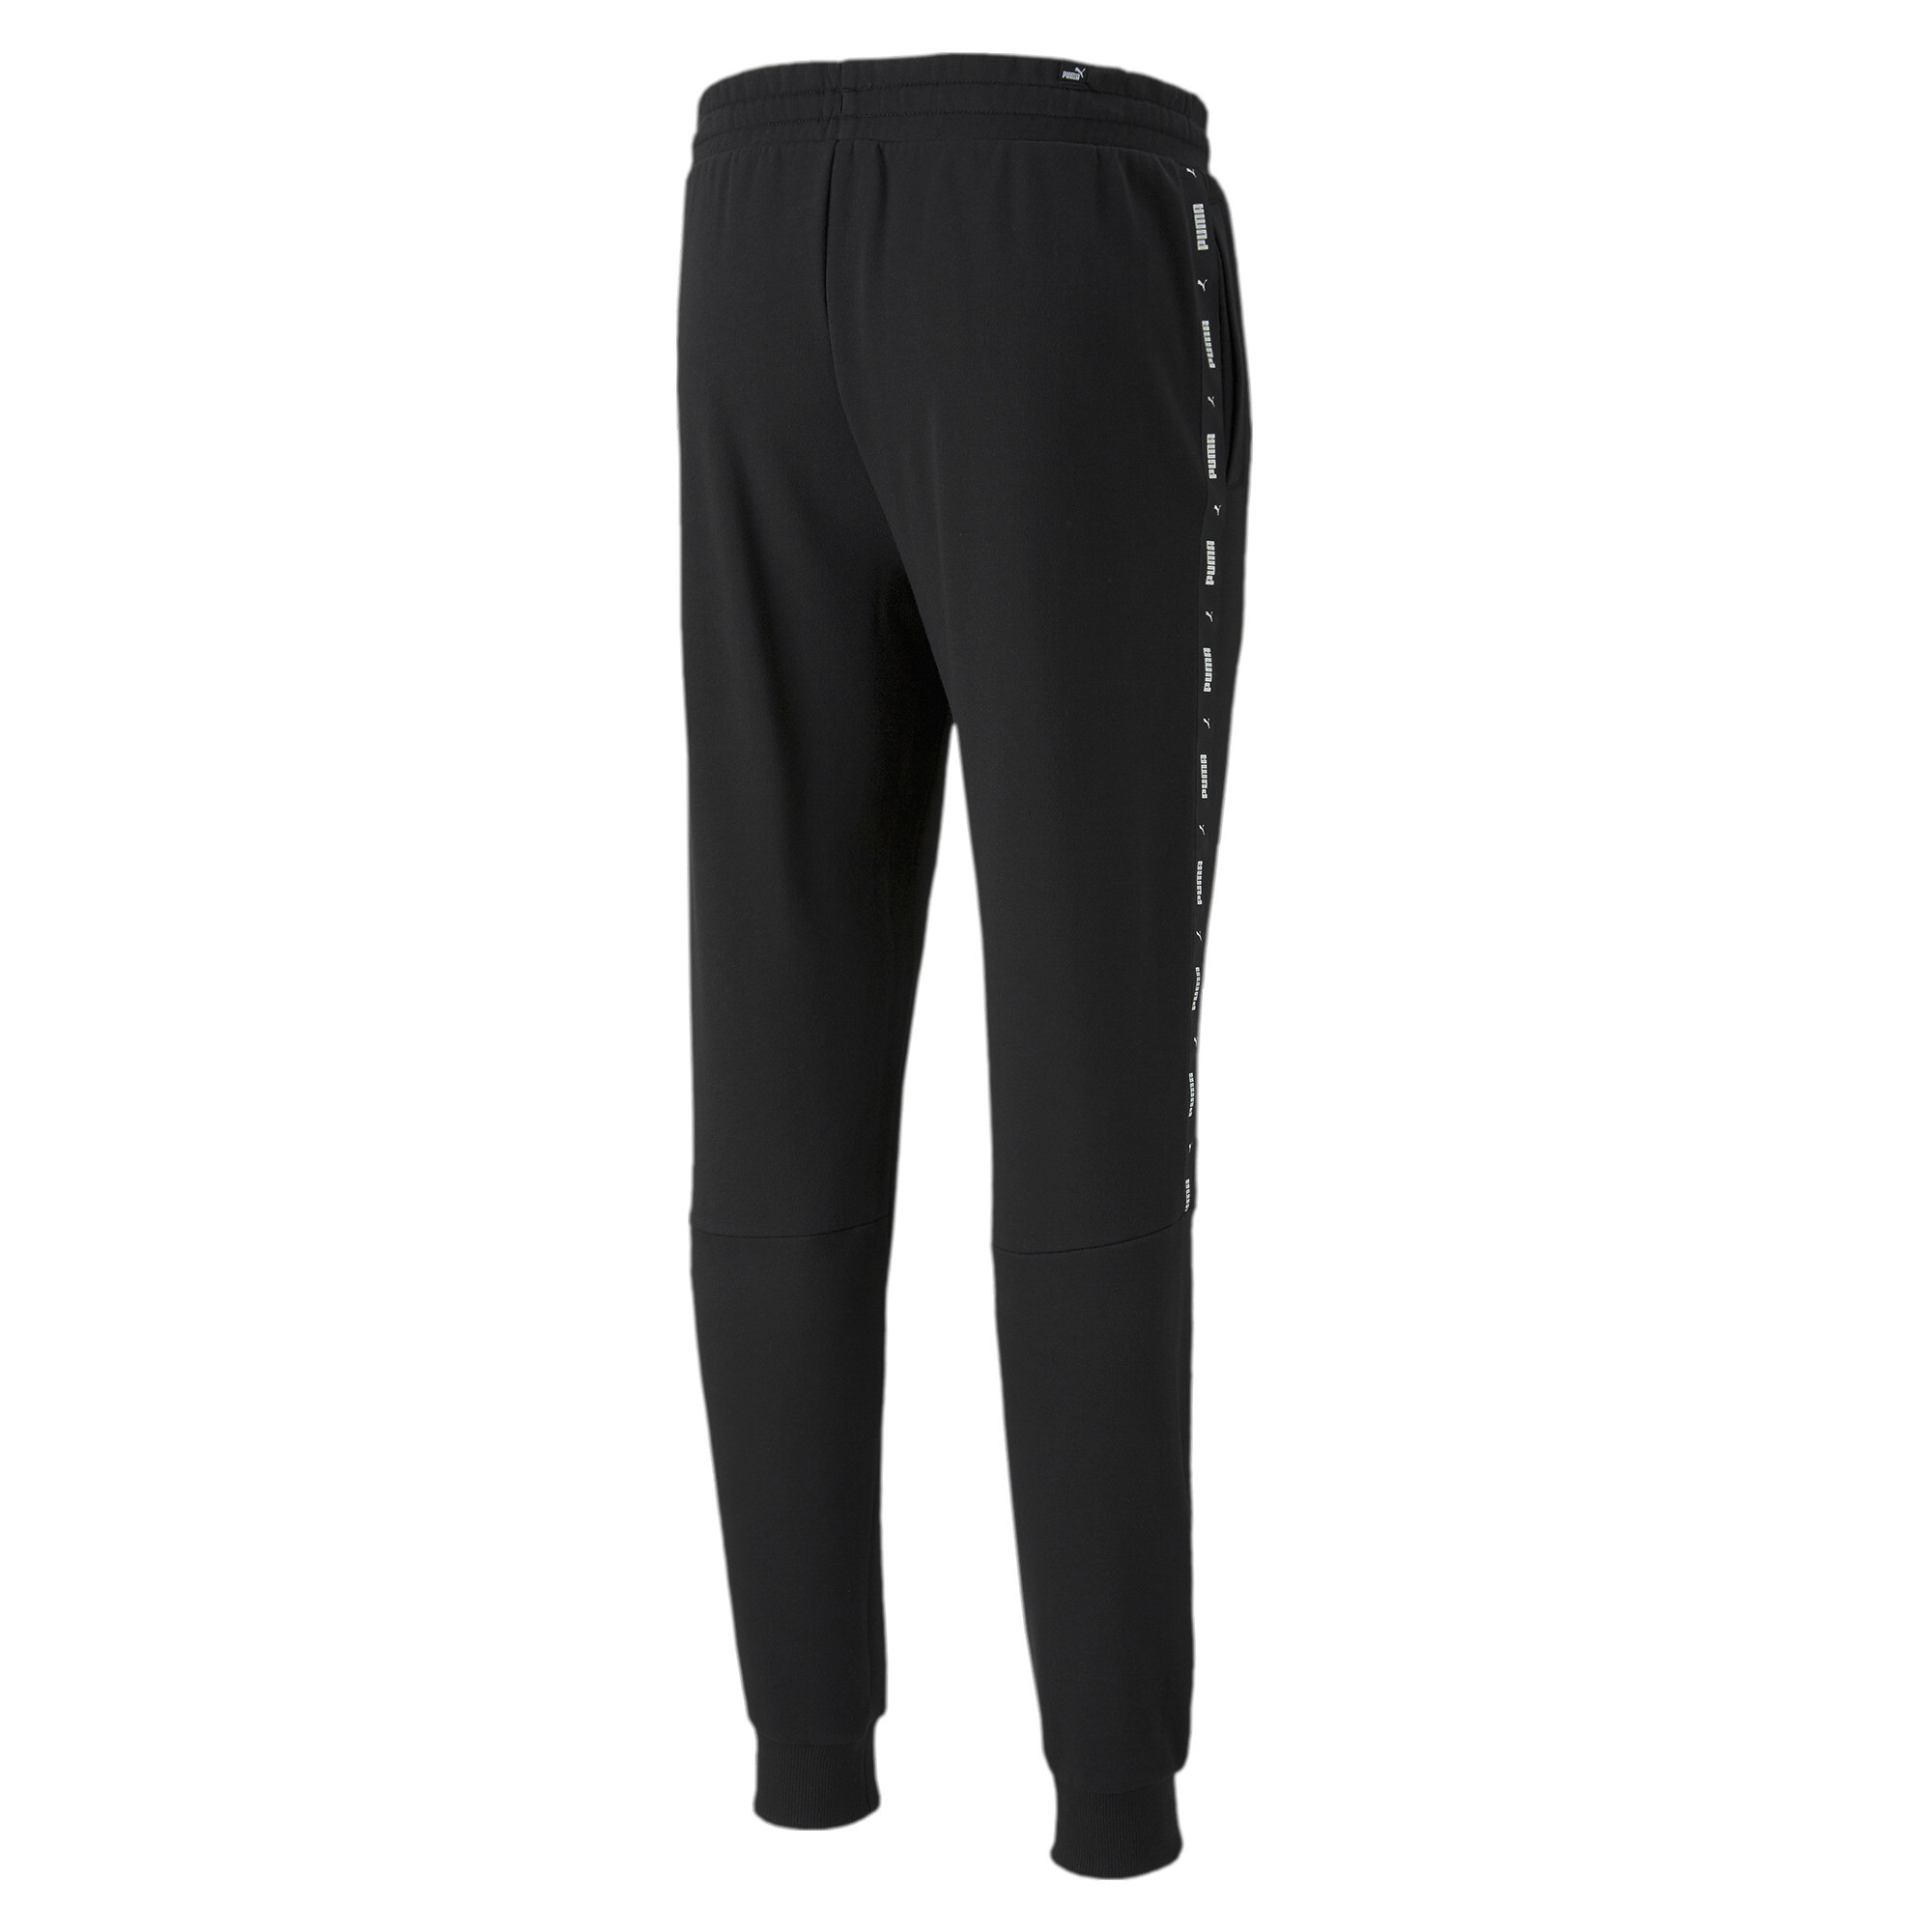 Men's Puma Essentials+ Tape's Sweatpants, Black, Size 3XL, Clothing